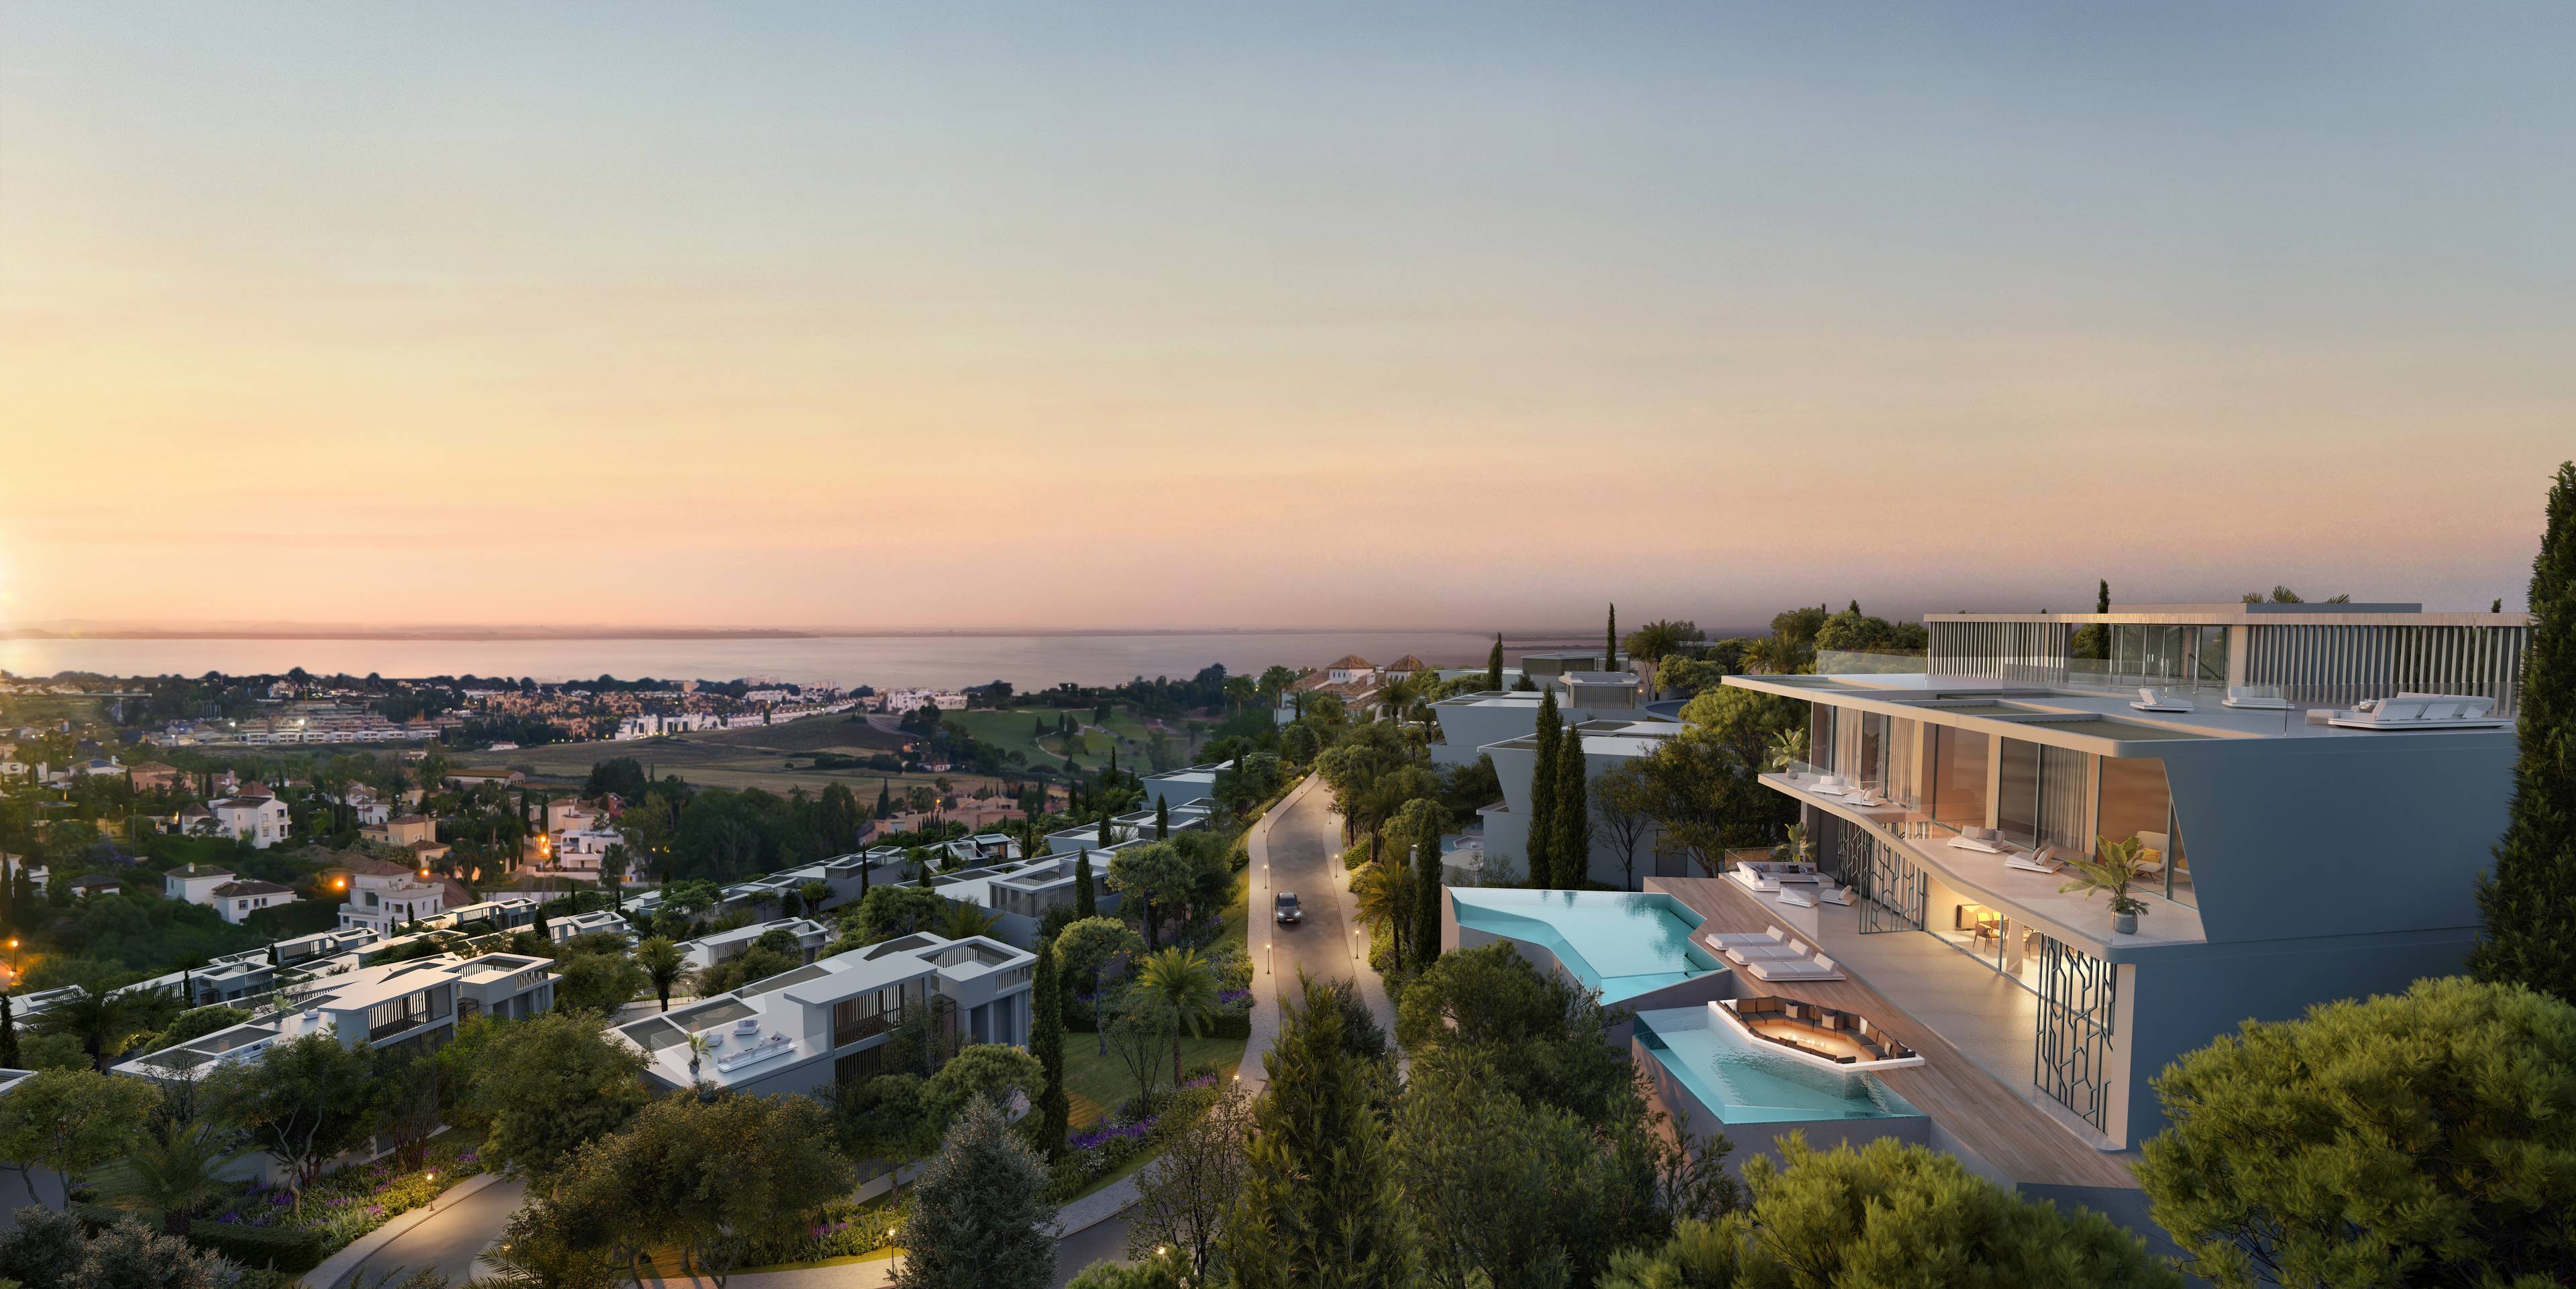 5 Bedroom Villa for Sale in the heart of Benahavís - Tierra Viva: Design Inspired by Automobili Lamborghini